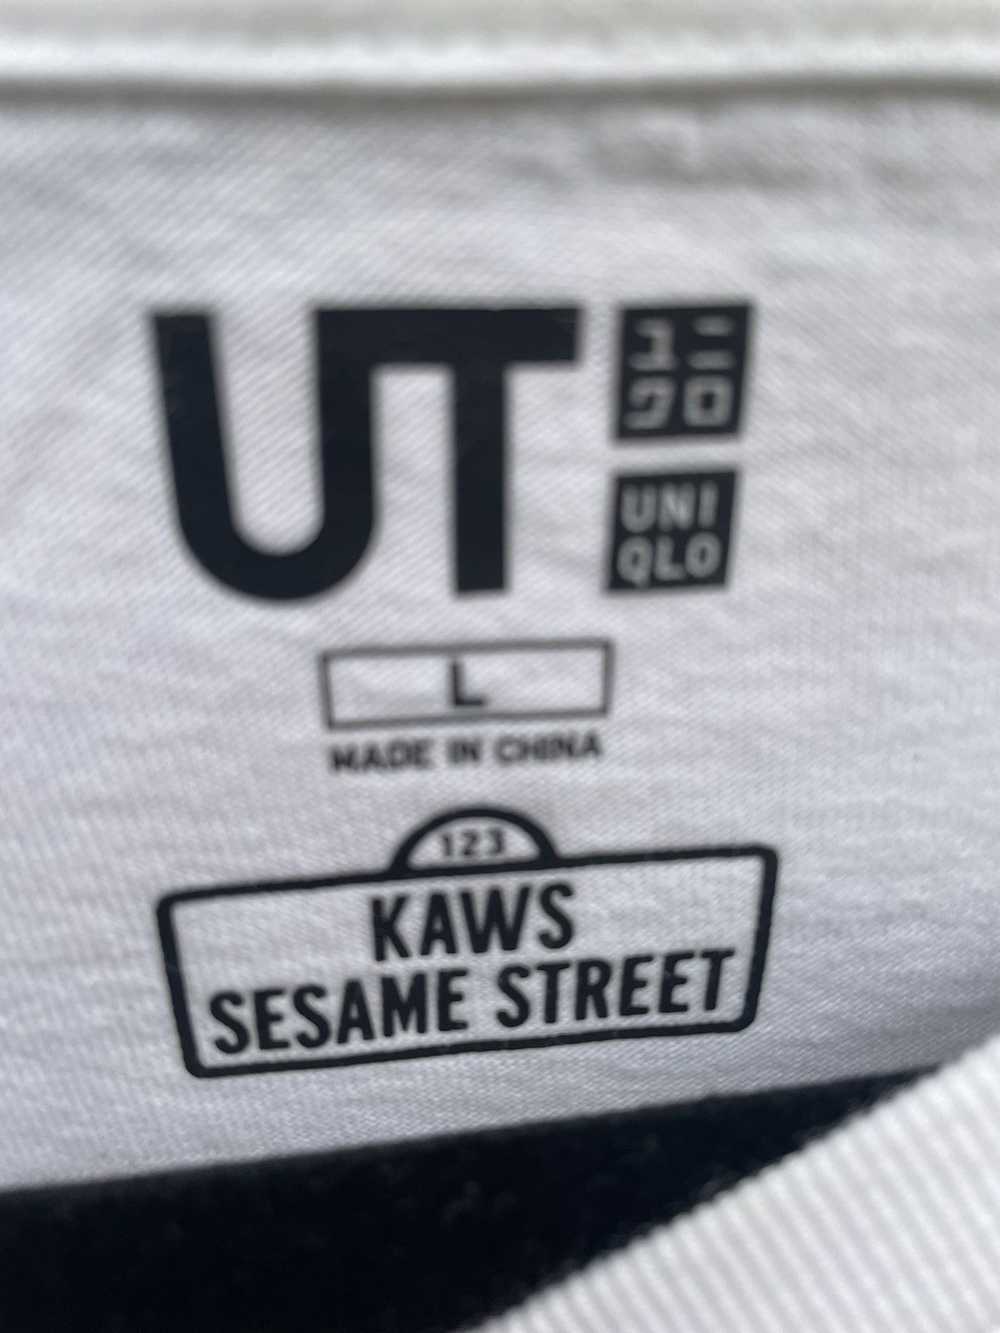 Kaws × Uniqlo Kaws x Uniqlo x sesame street - image 2